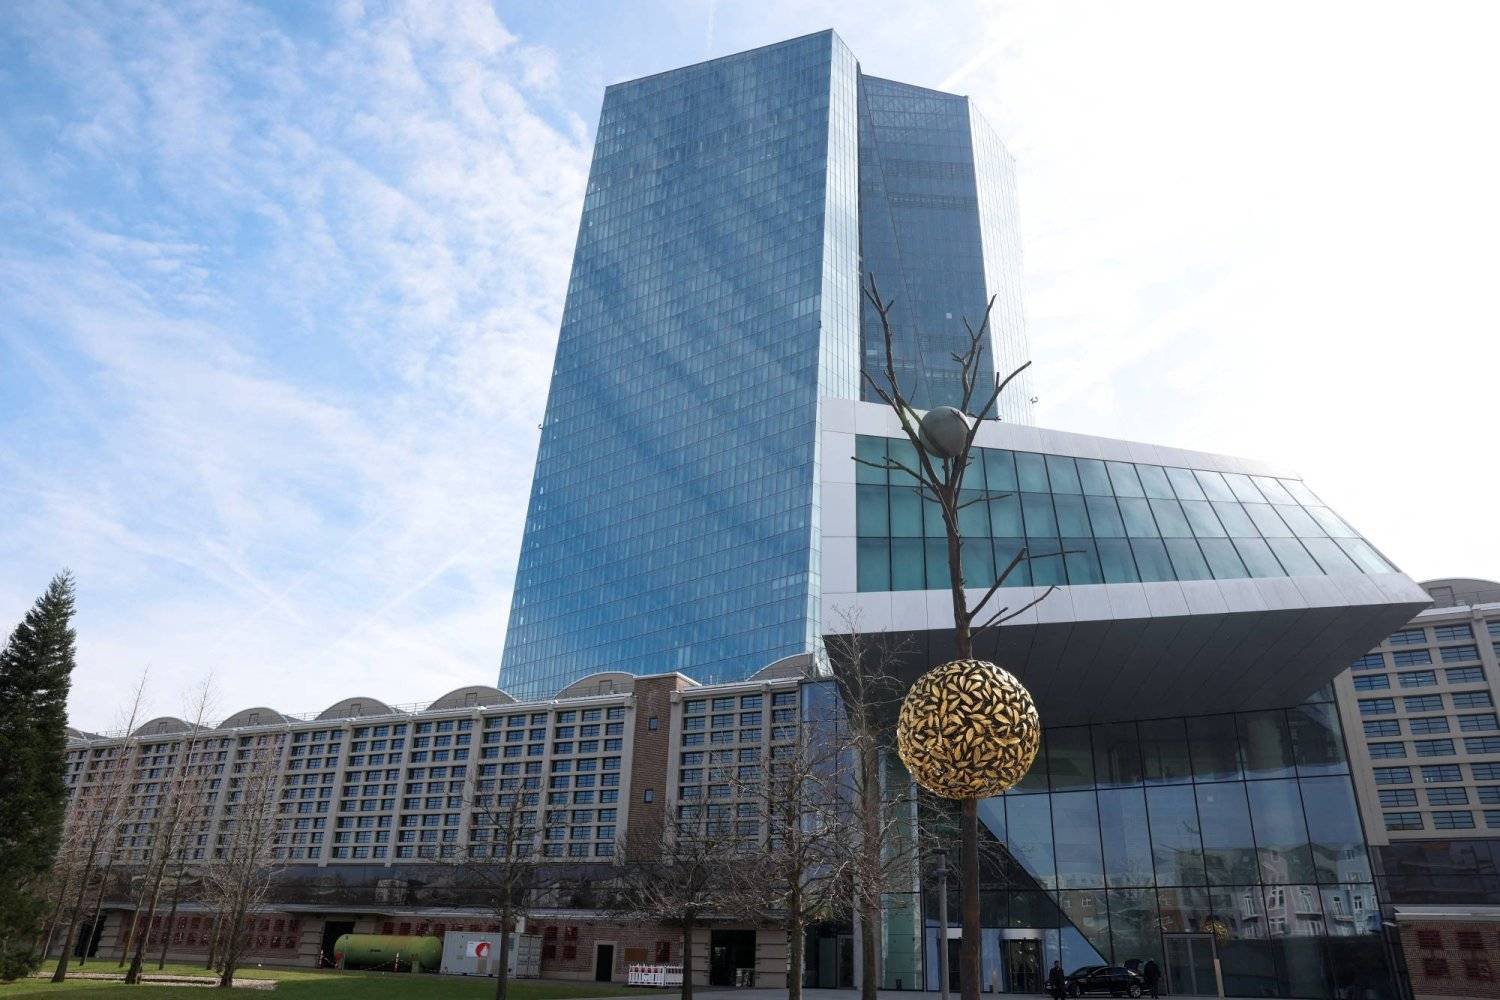 The European Central Bank headquarters in Frankfurt. SPA